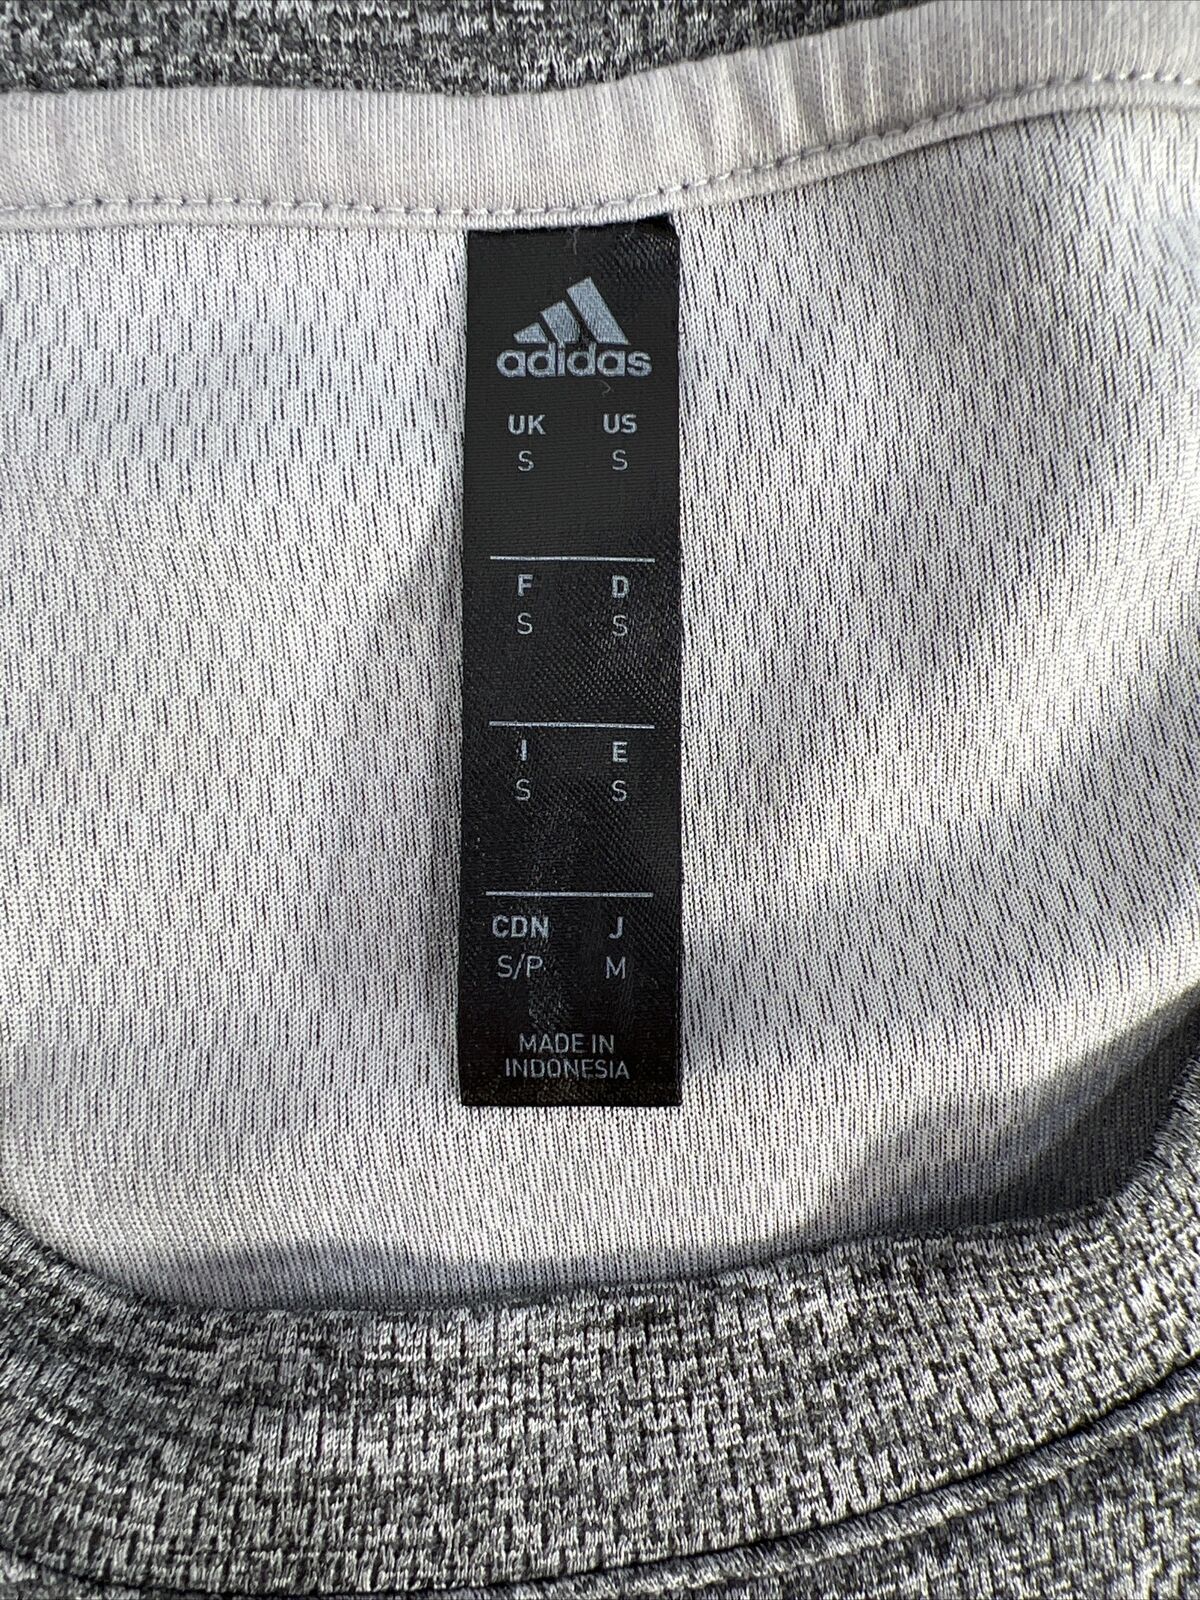 adidas Men's Gray Heathered Short Sleeve Athletic T-Shirt - S